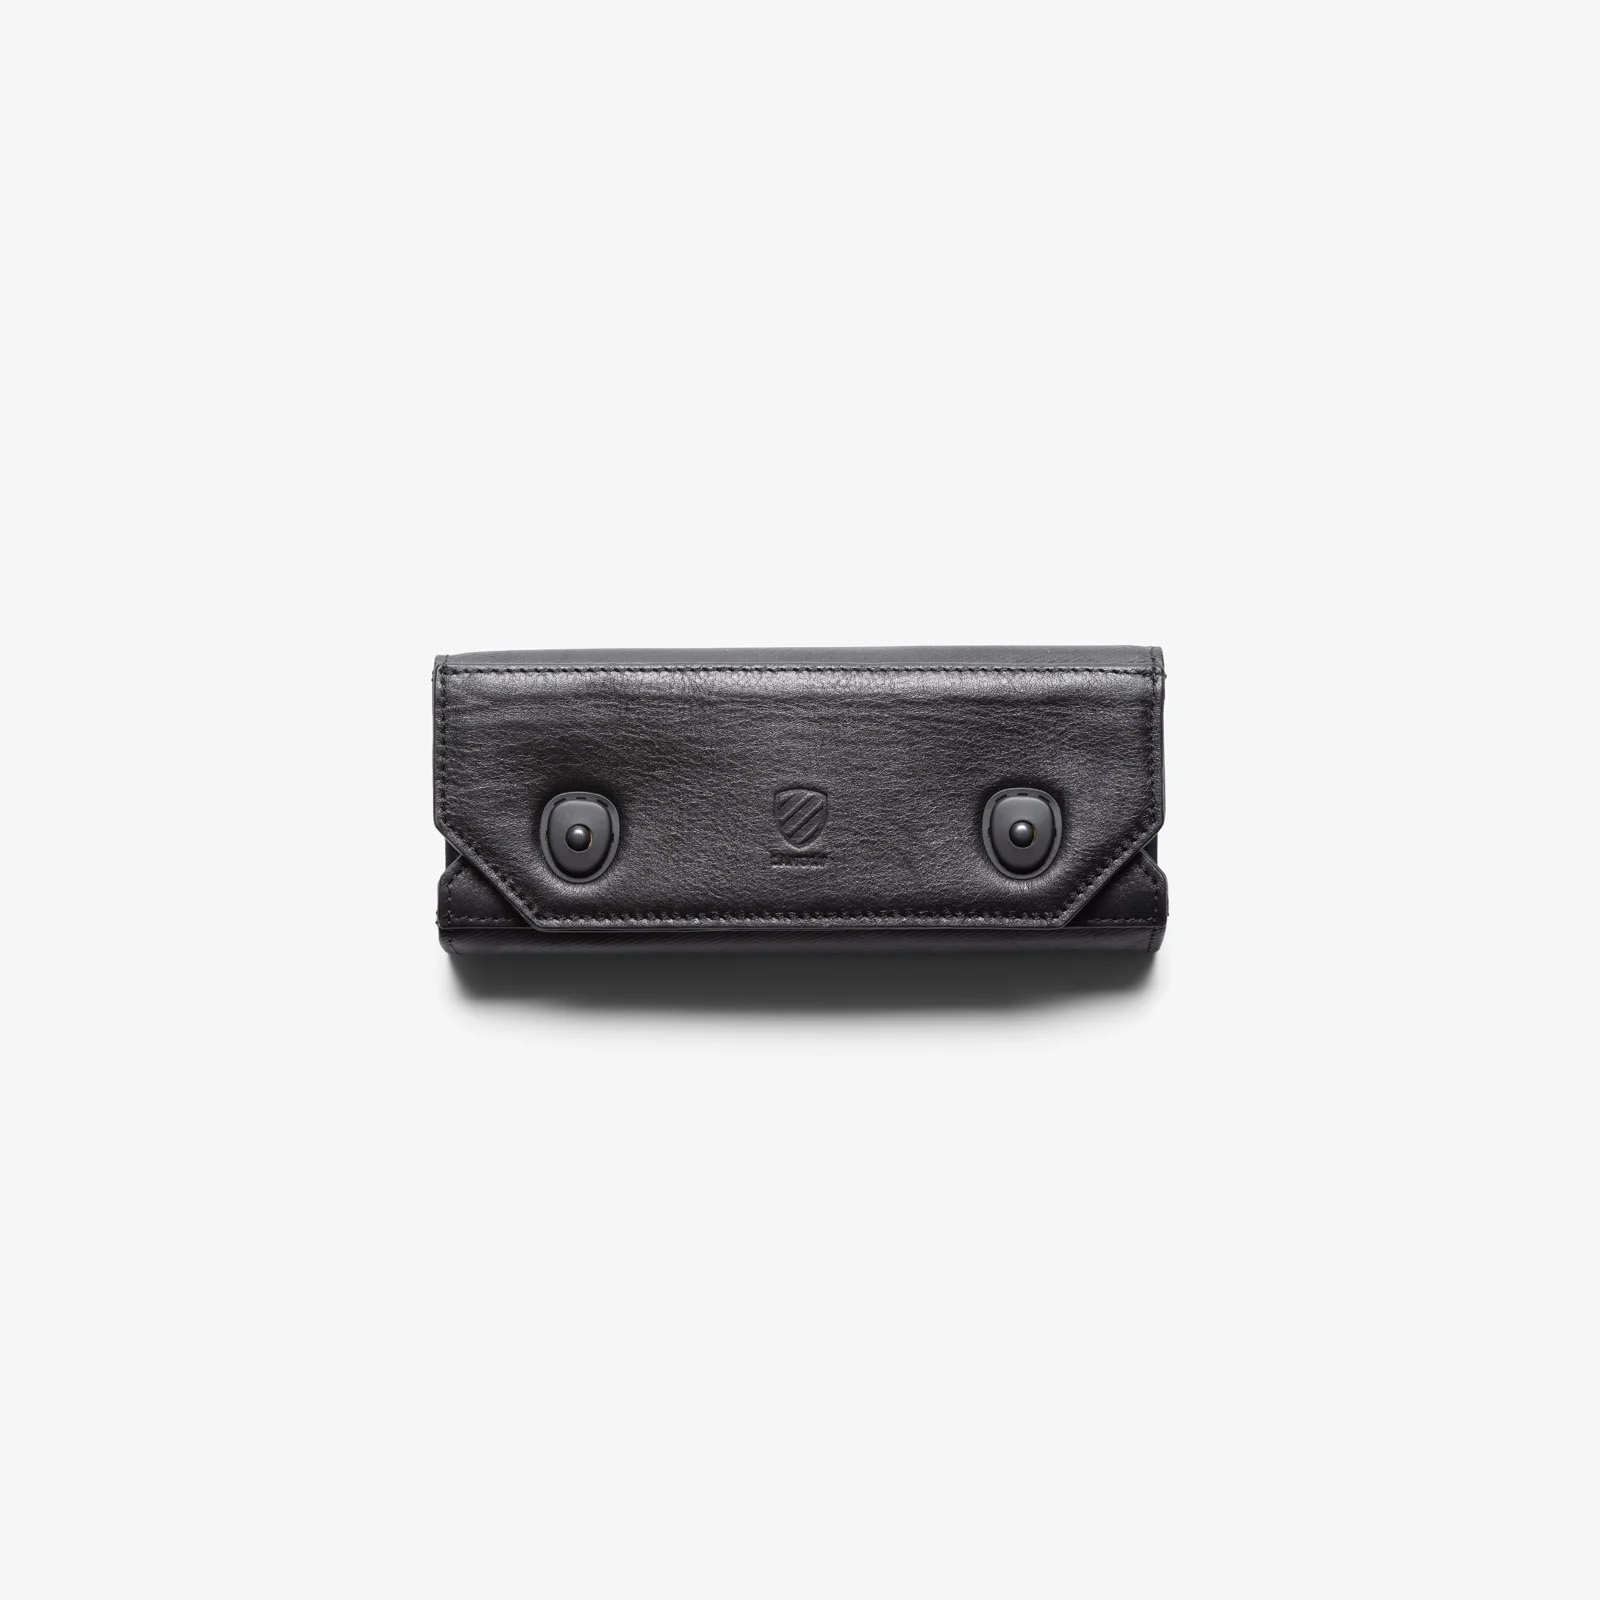 Image of Langly Camera Battery and Film Holder Black